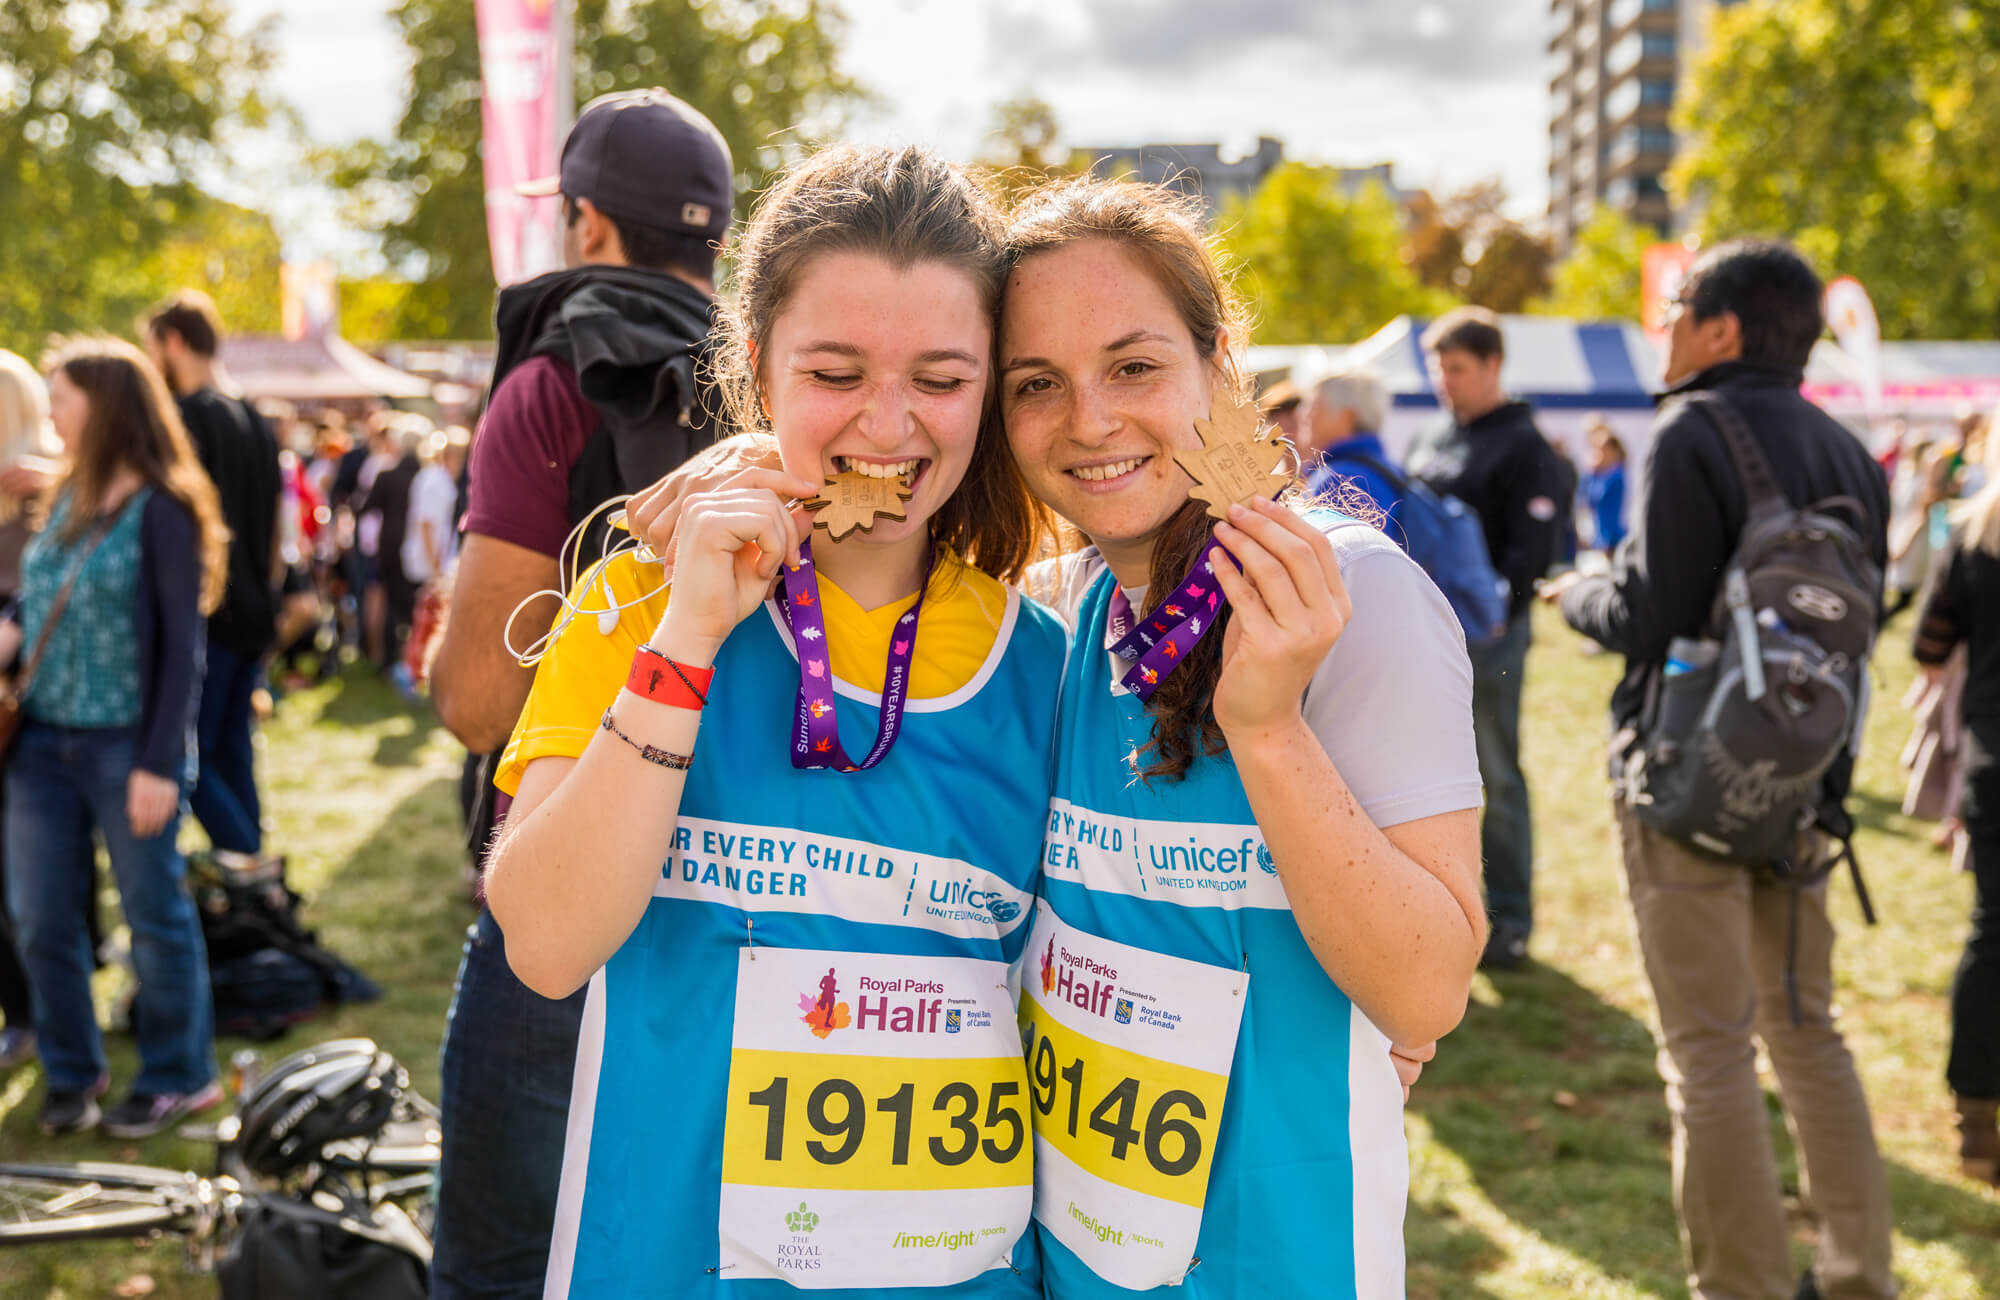 Run the Royal Parks Half Marathon in aid of Unicef UK ©Unicef_Tsang